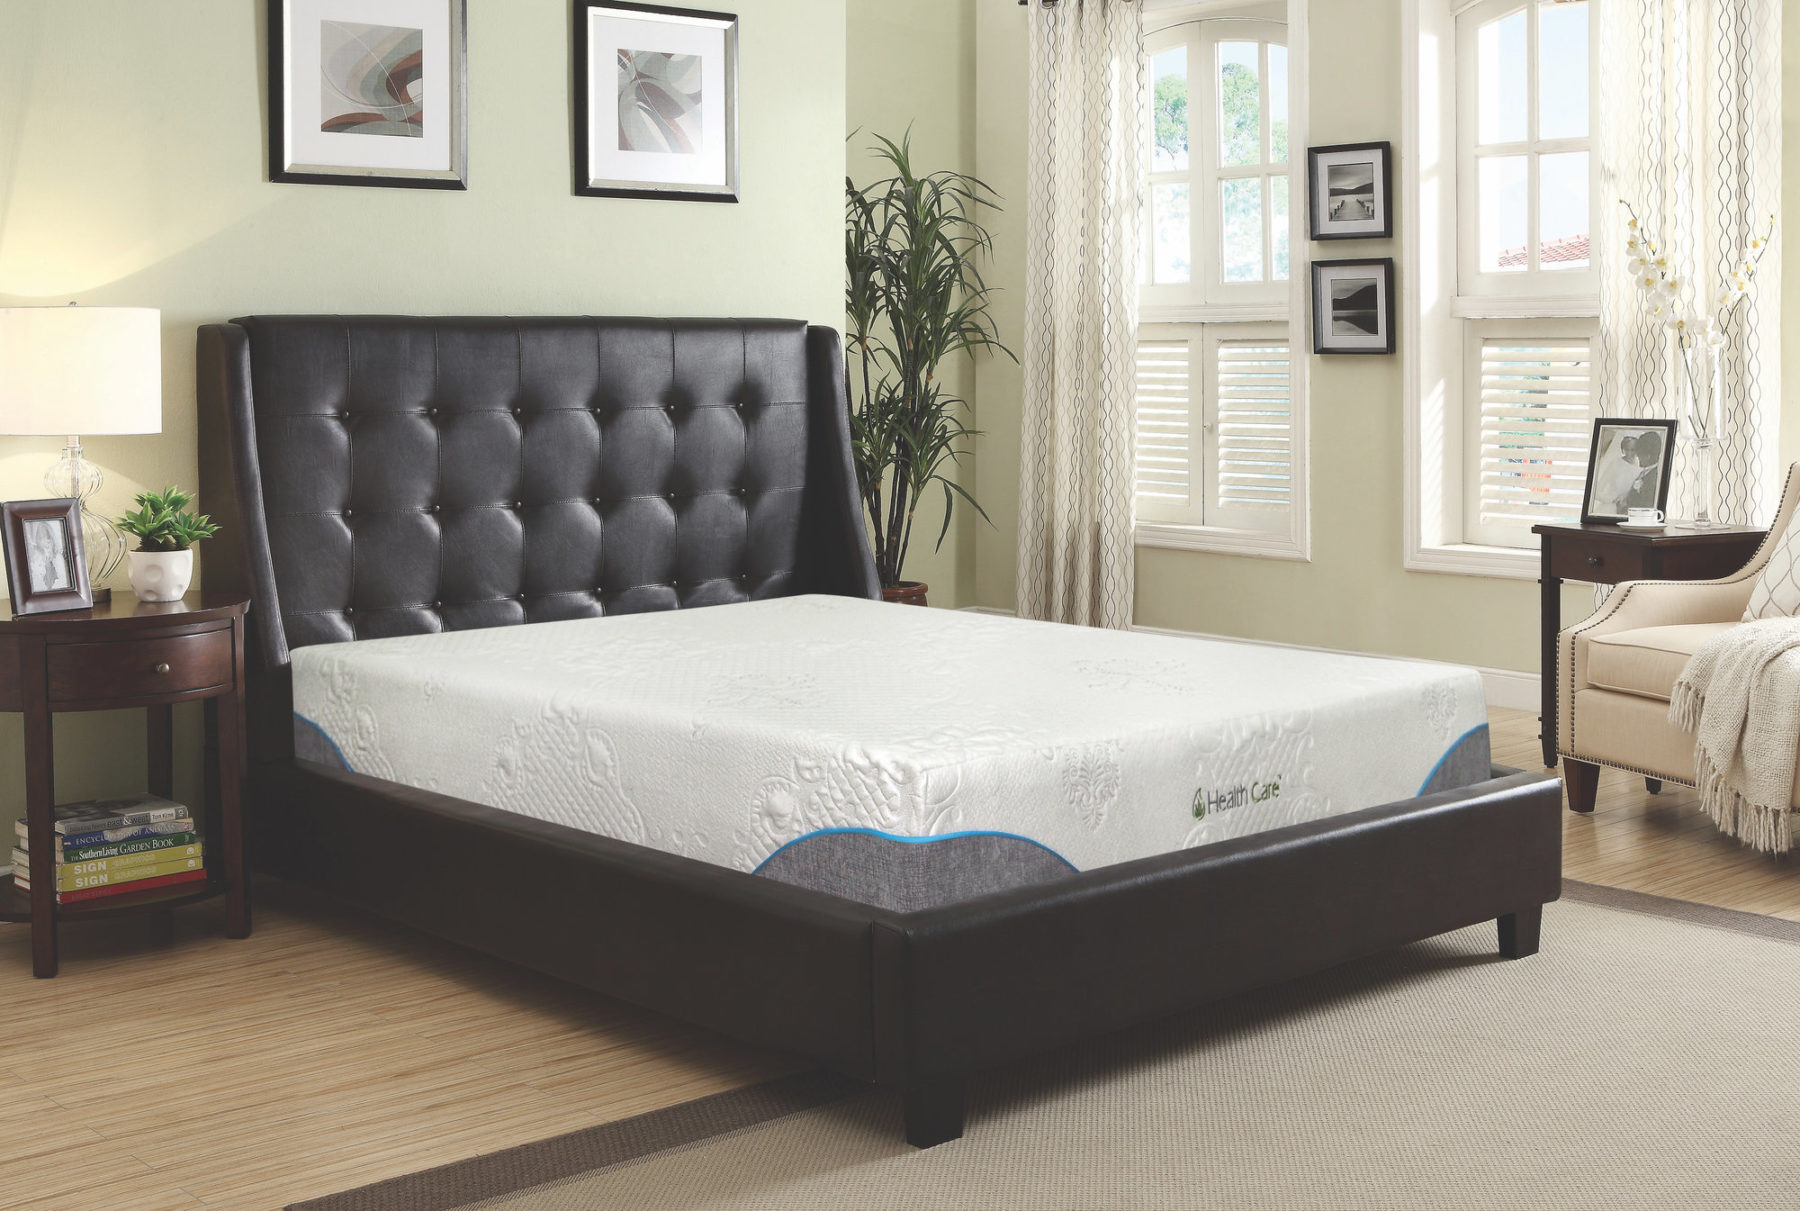 gelcare signature mattress reviews